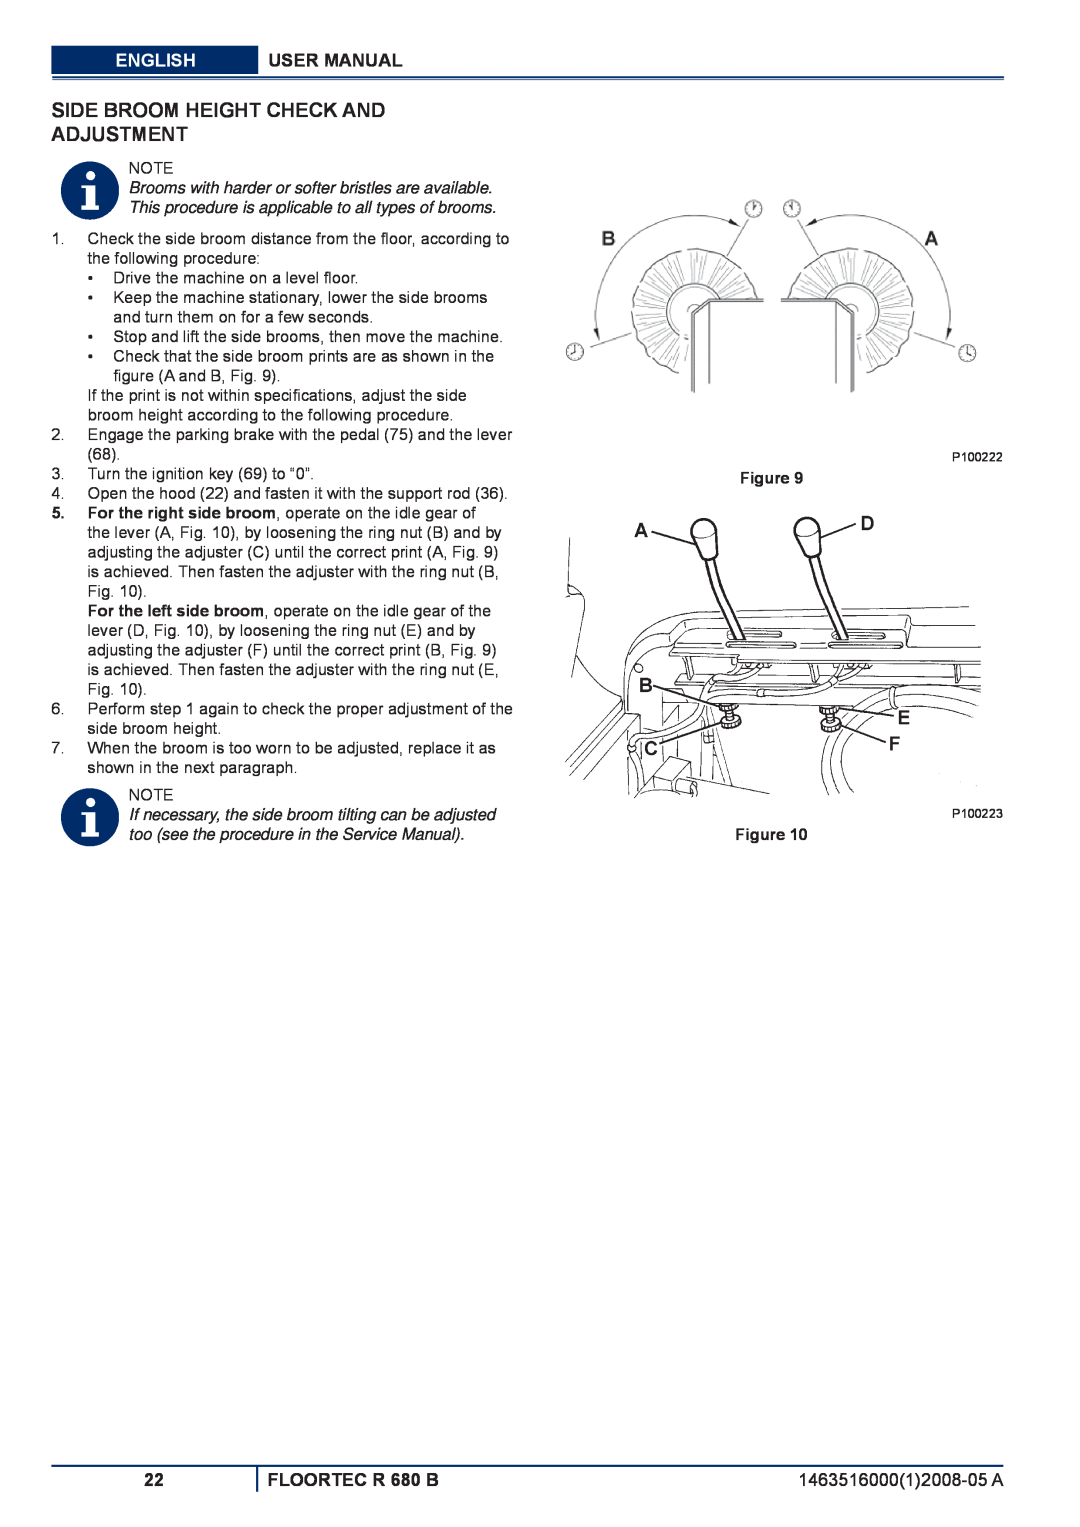 Nilfisk-ALTO manuel dutilisation Side Broom Height Check And Adjustment, English, User Manual, FLOORTEC R 680 B, Figure 